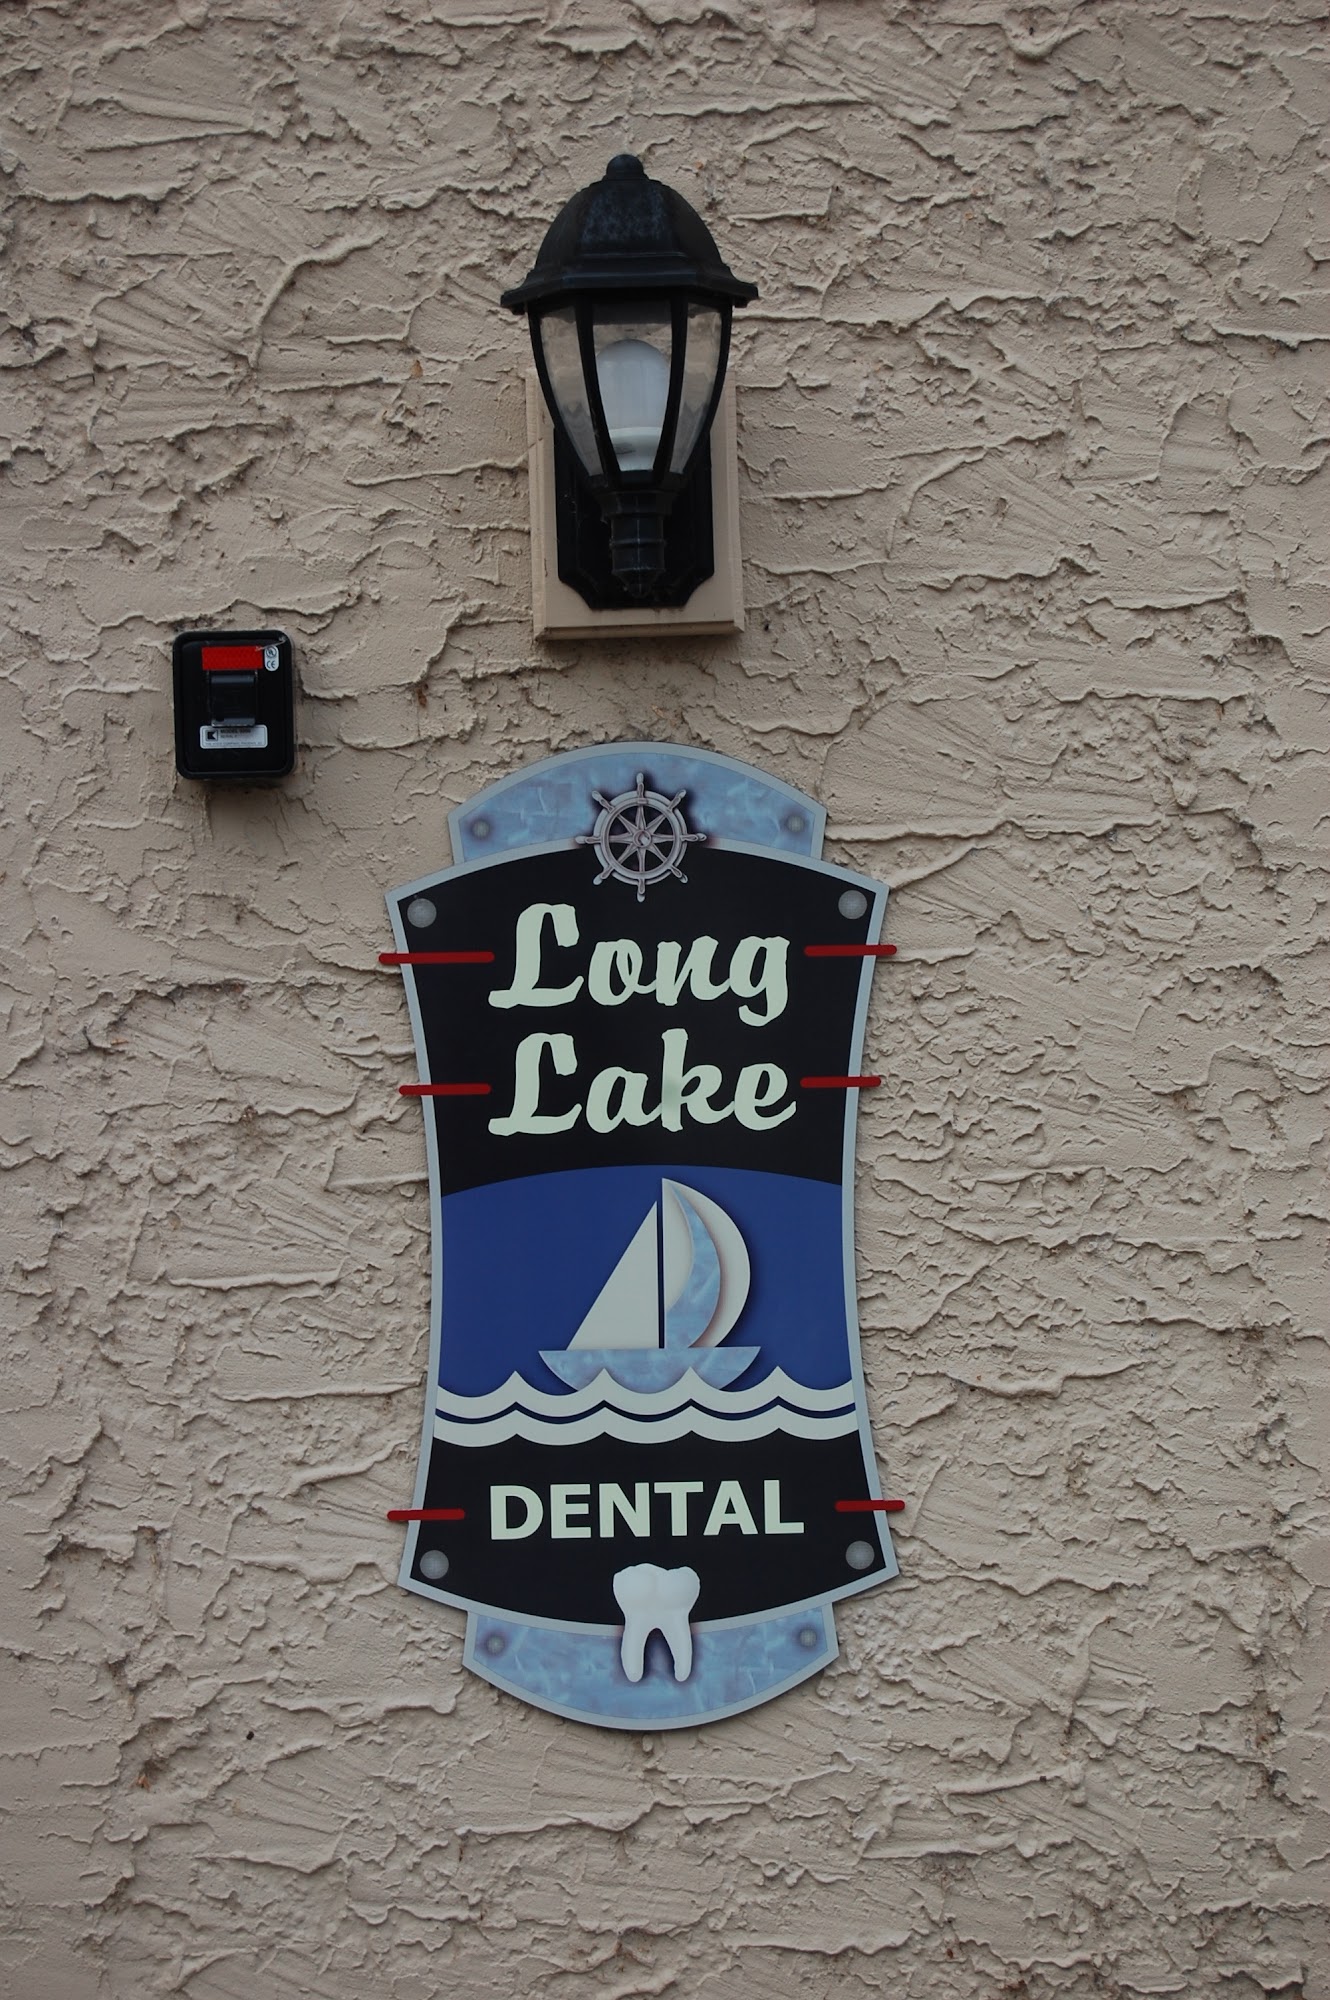 Long Lake Dental 1870 Wayzata Blvd, Long Lake Minnesota 55356